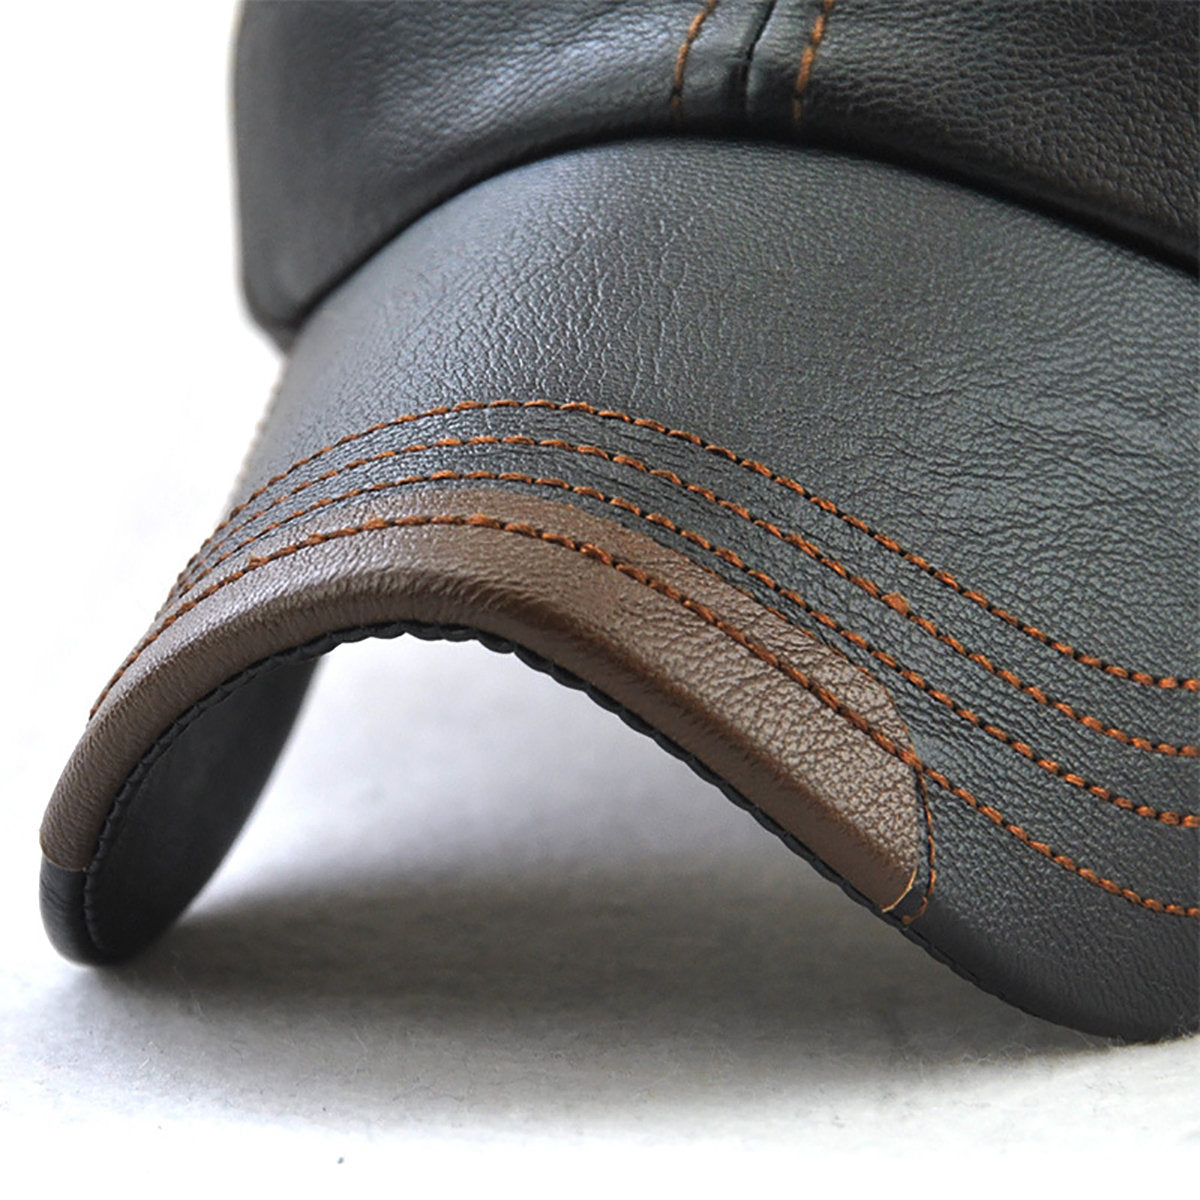 Men PU Leather Vintage Baseball Cap Casual Outdoor Adjustable Warm lightness Hats